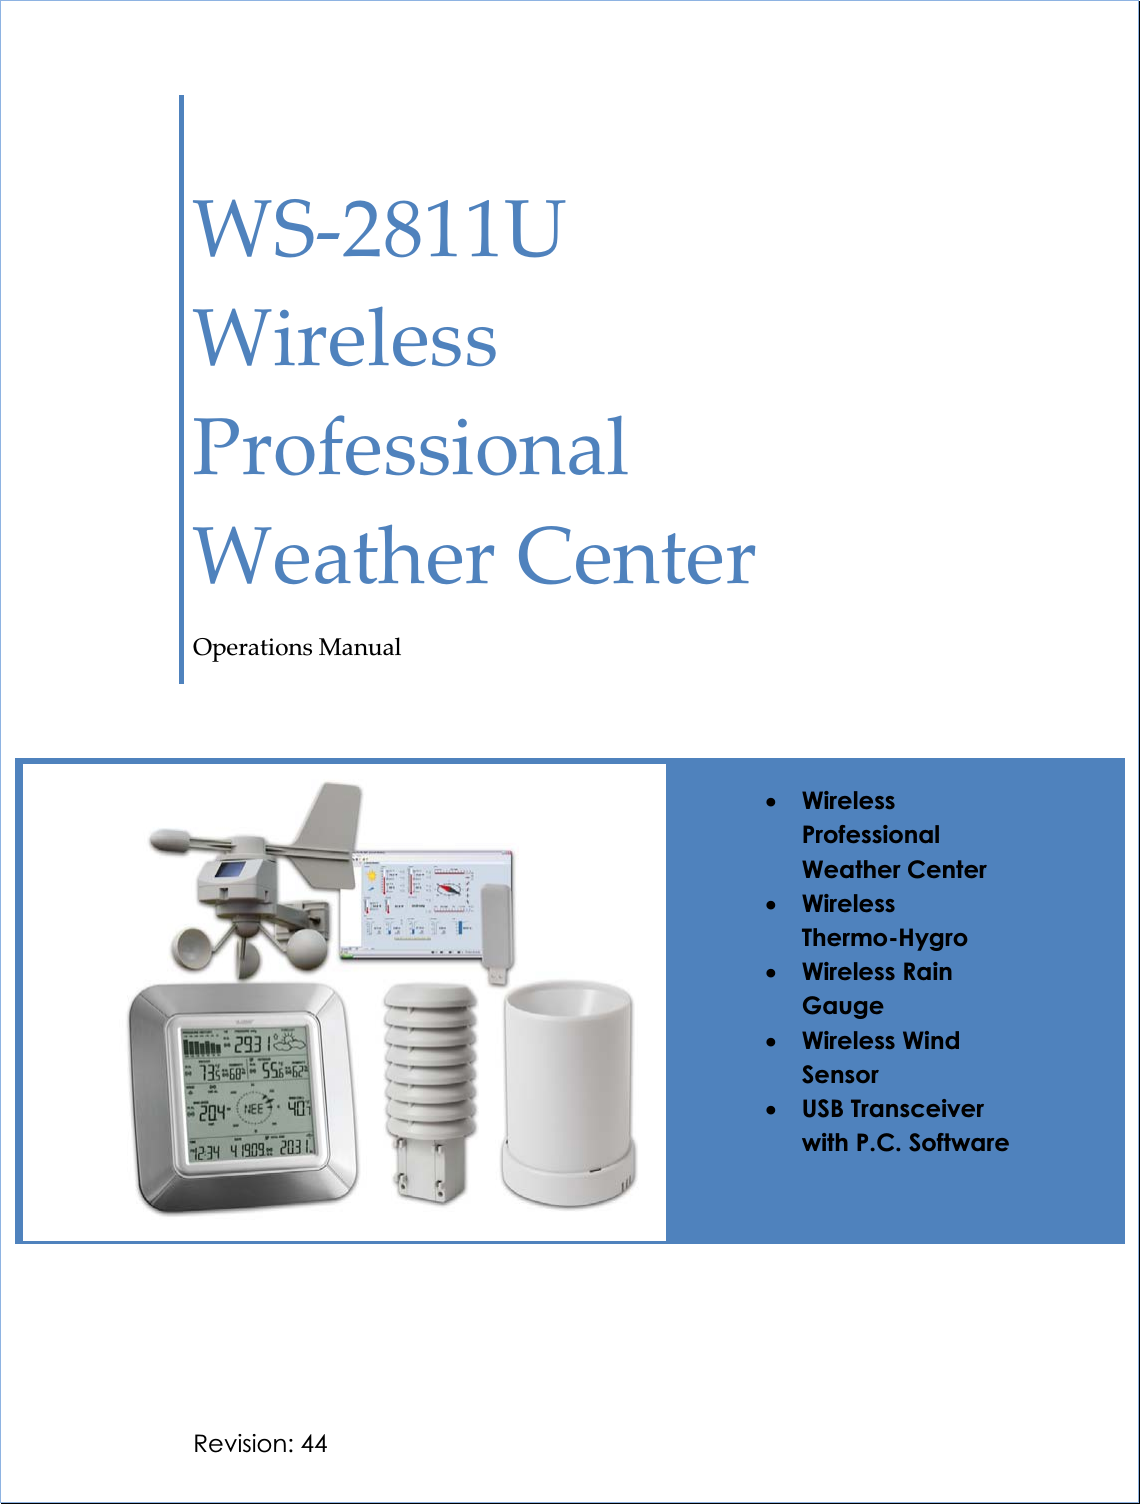 ȱWSȬ2811UȱWirelessȱProfessionalȱWeatherȱCenterȱOperationsȱManualȱRevision: 44 xWireless Professional Weather Center xWireless  Thermo-Hygro xWireless Rain Gauge xWireless Wind Sensor xUSB Transceiver with P.C. Software 